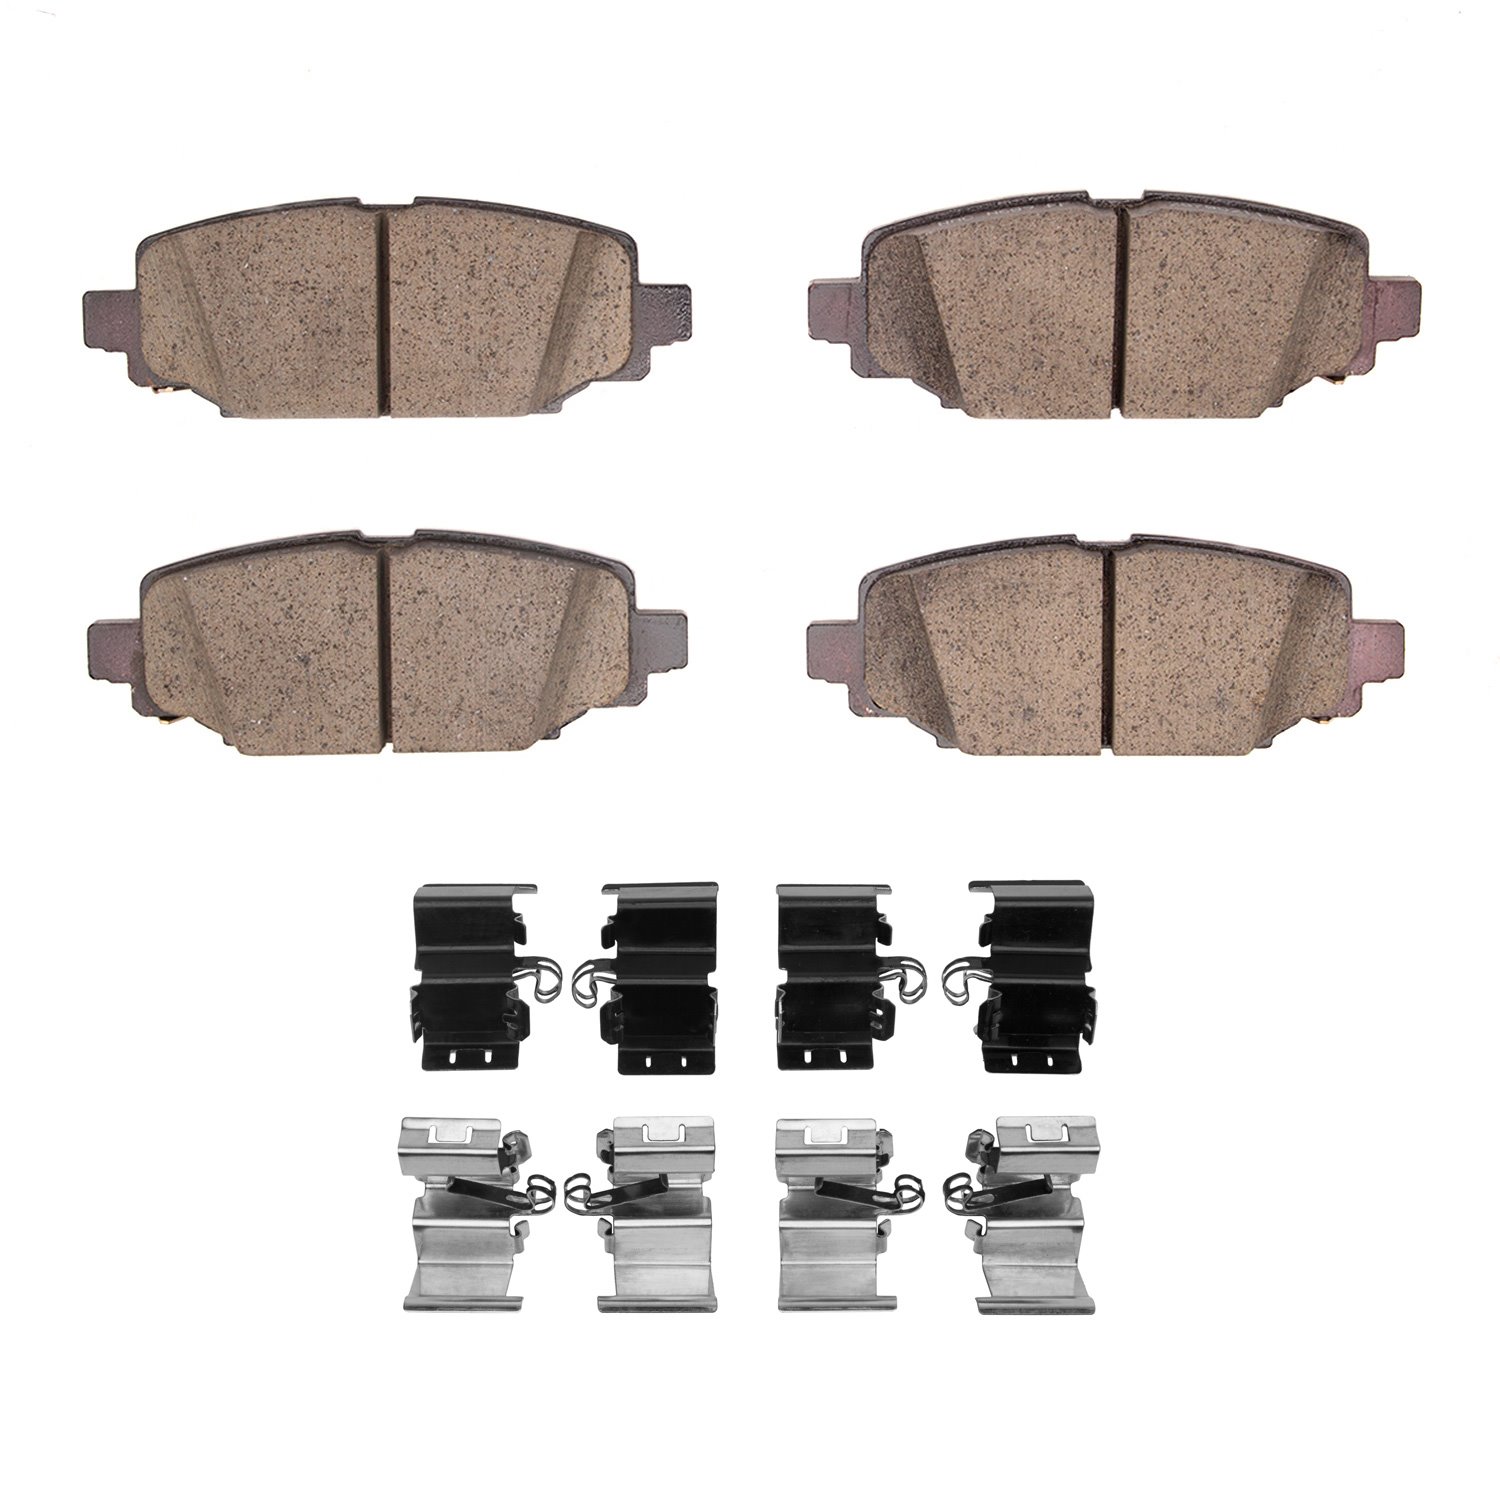 1400-2172-01 Ultimate-Duty Brake Pads & Hardware Kit, Fits Select Mopar, Position: Rear